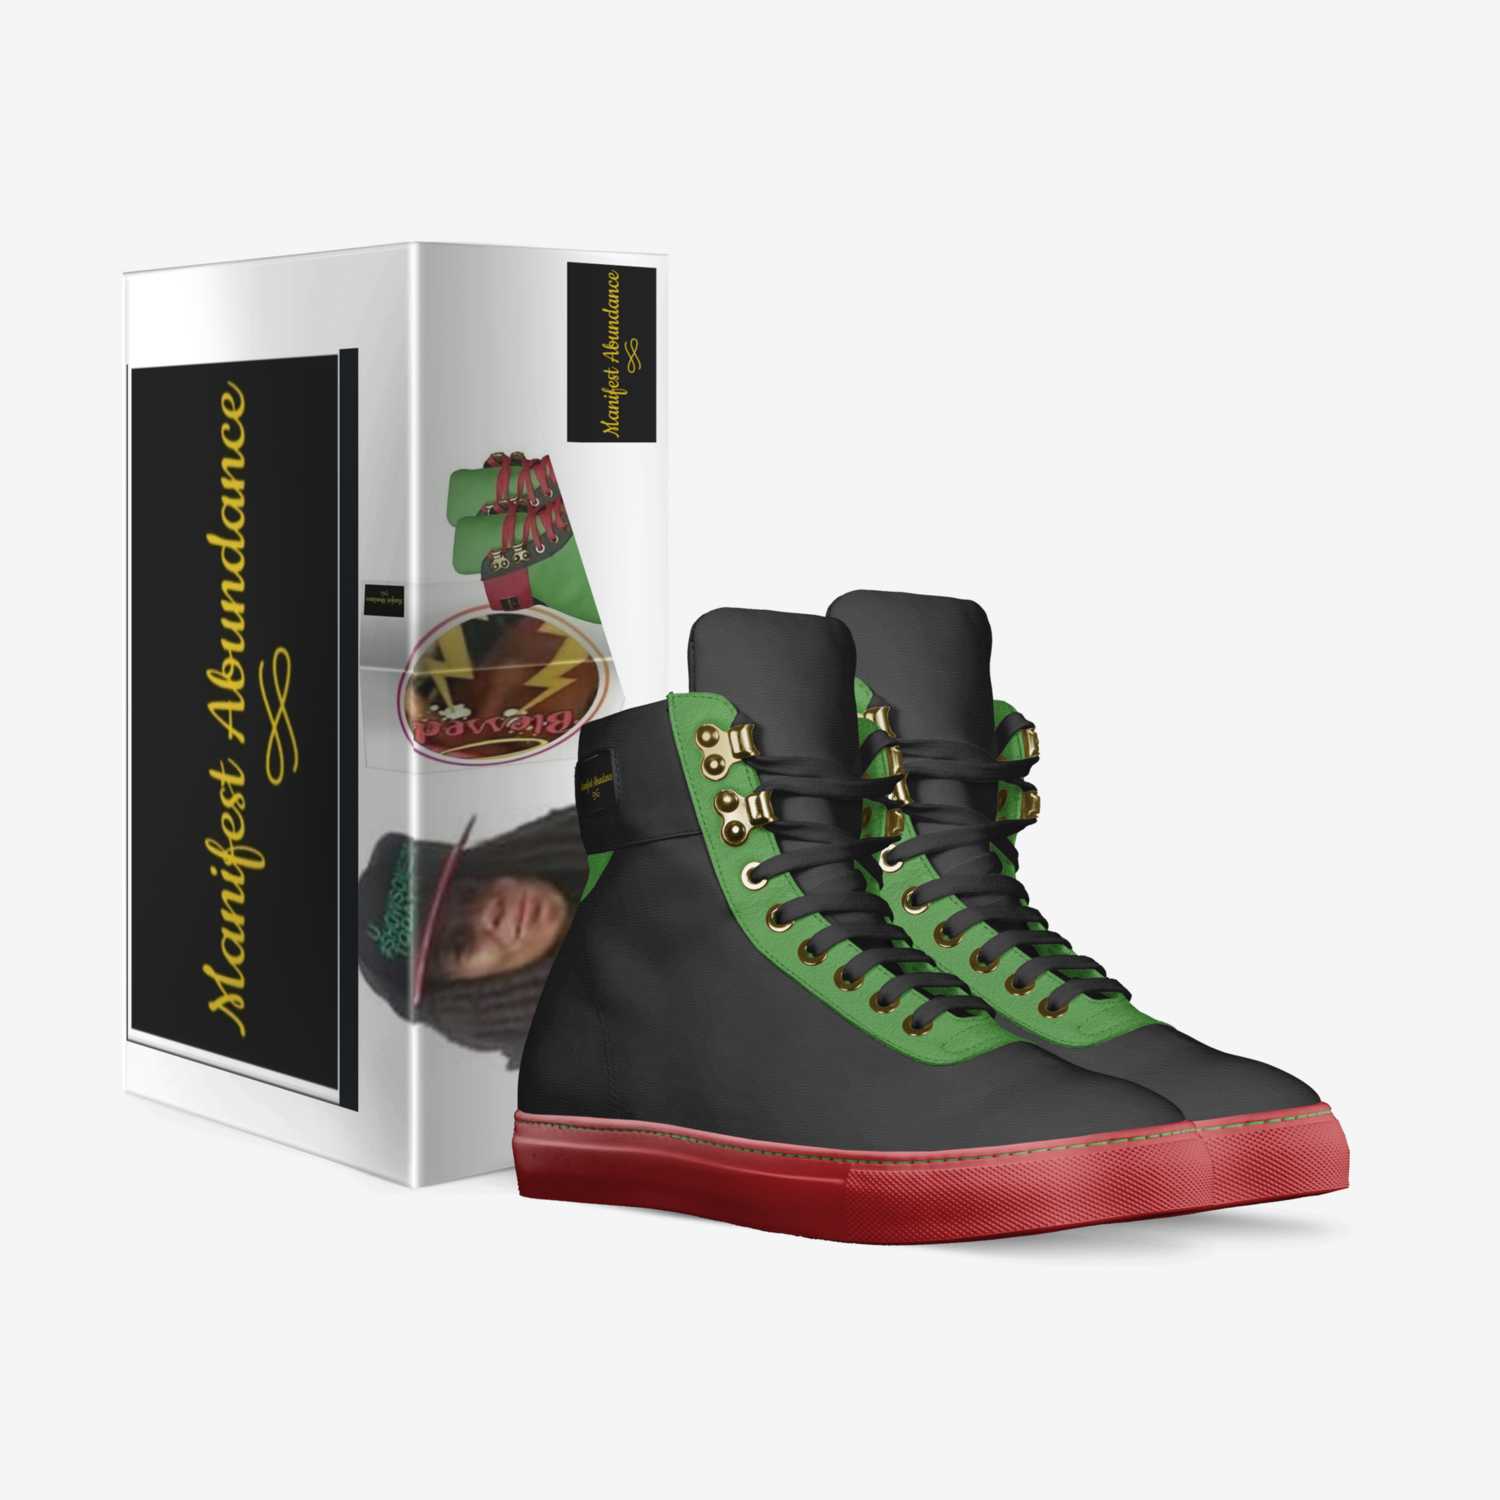 Manifest Abundance custom made in Italy shoes by Ms Kim Kicks | Box view